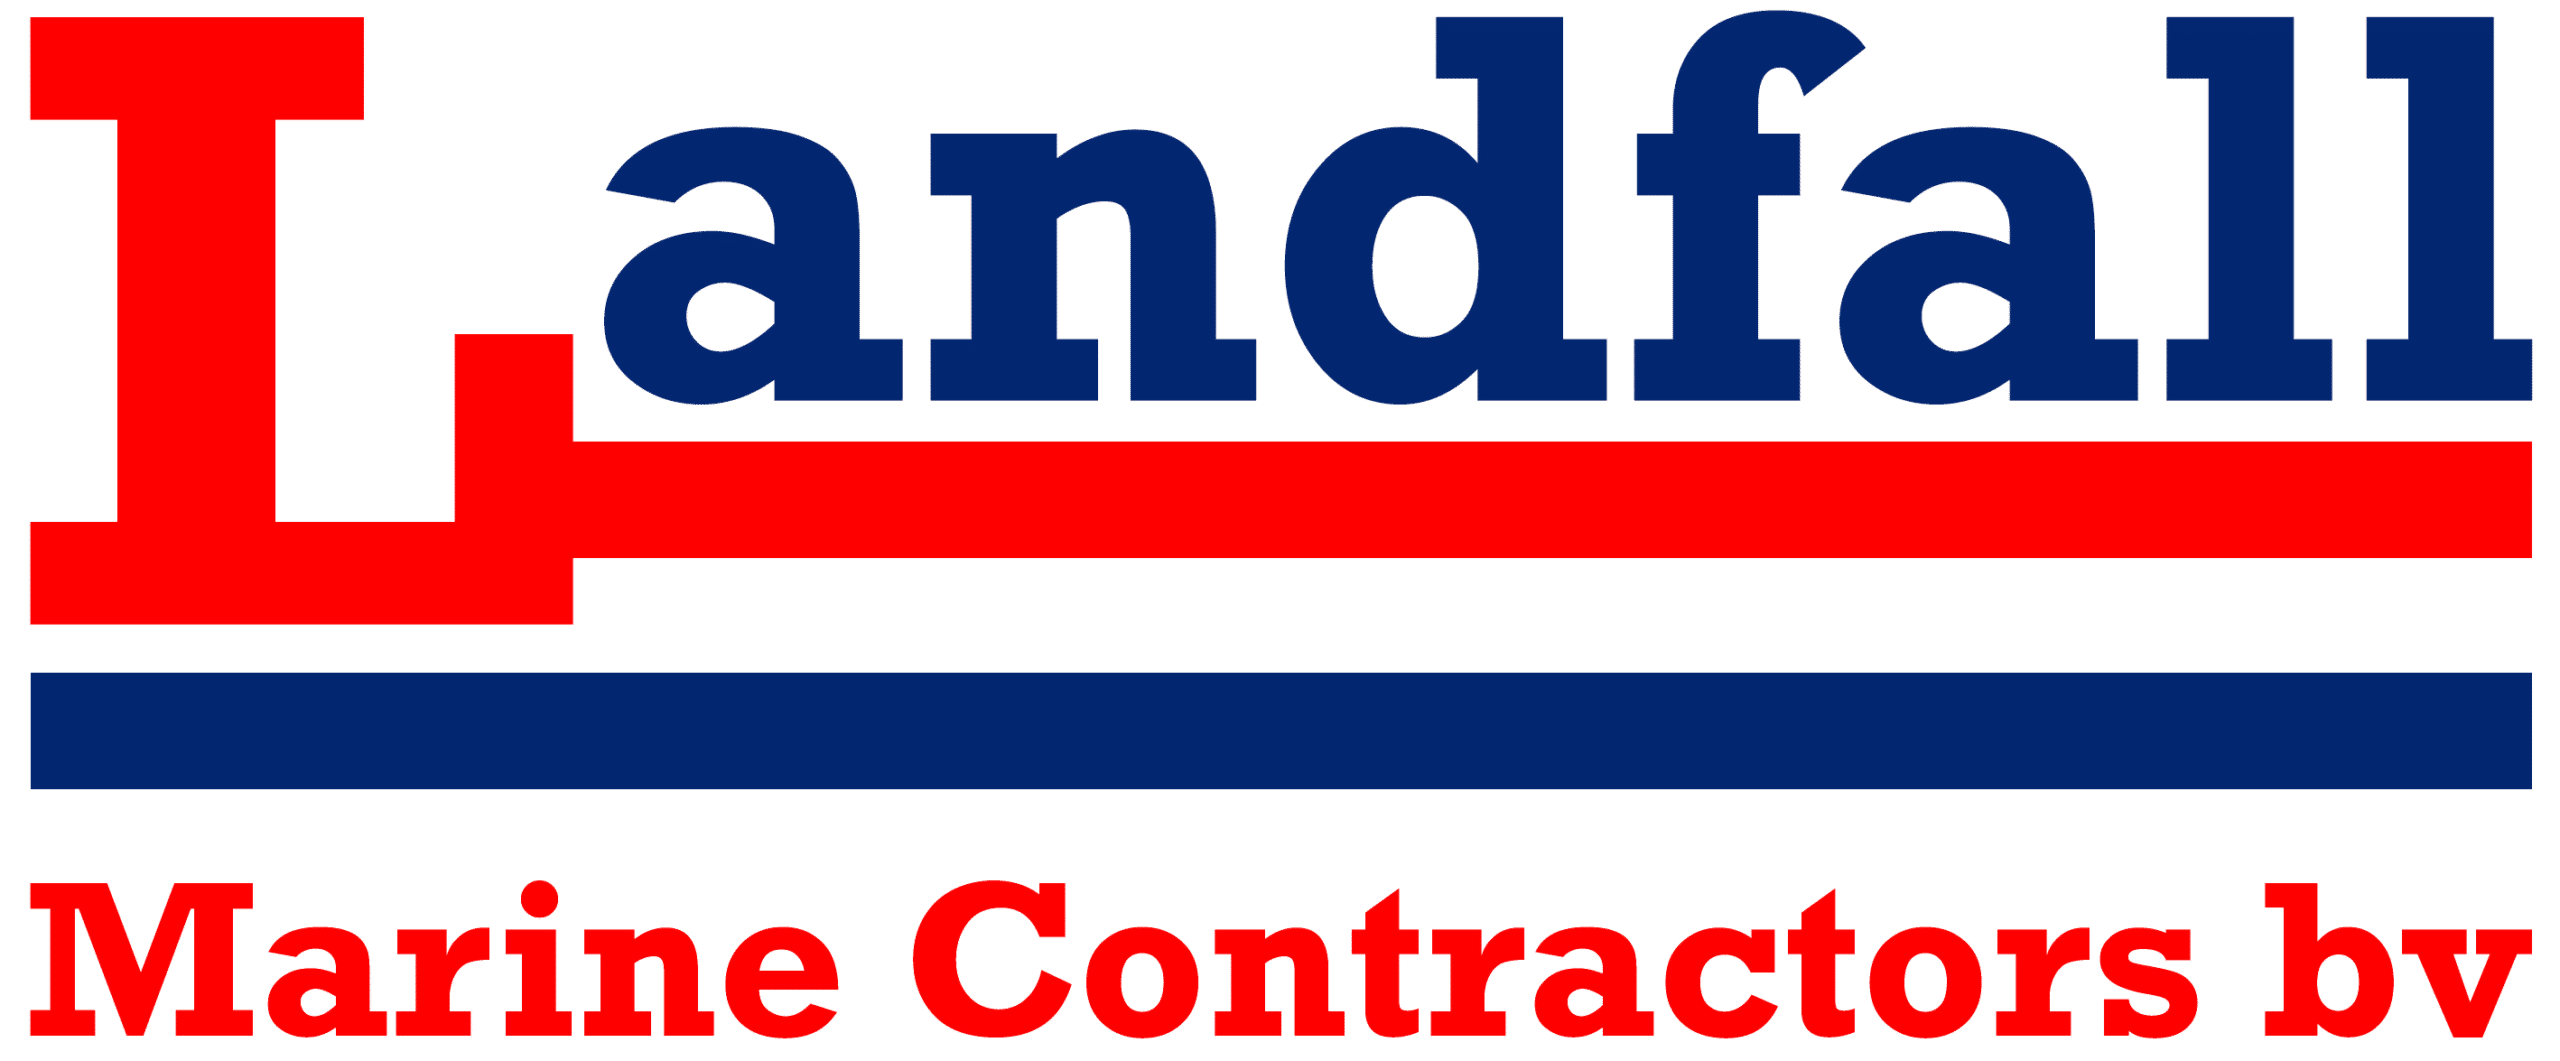 landfall marine contractors logo